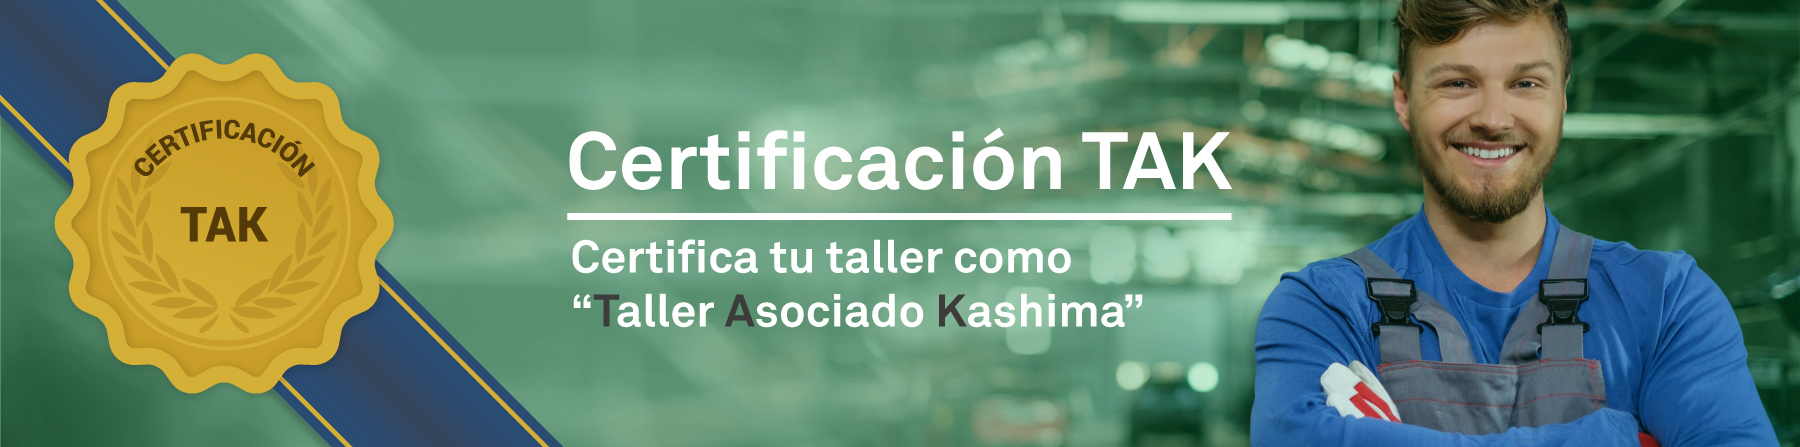 Certificación MAK